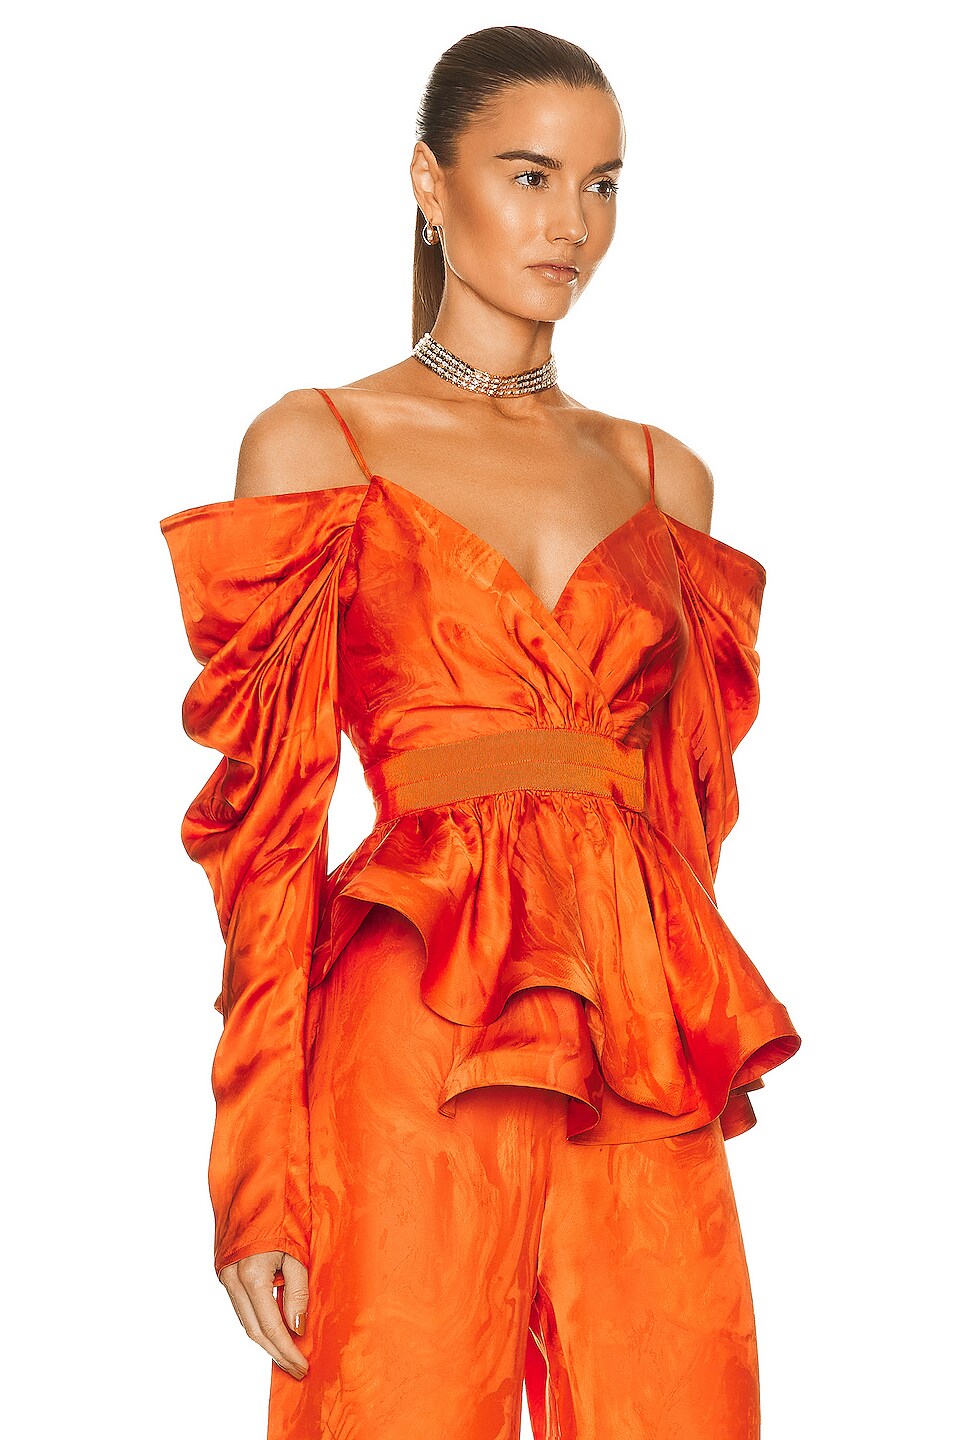 SILVIA TCHERASSI Cavallino Top in Orange Abstract Marble | FWRD